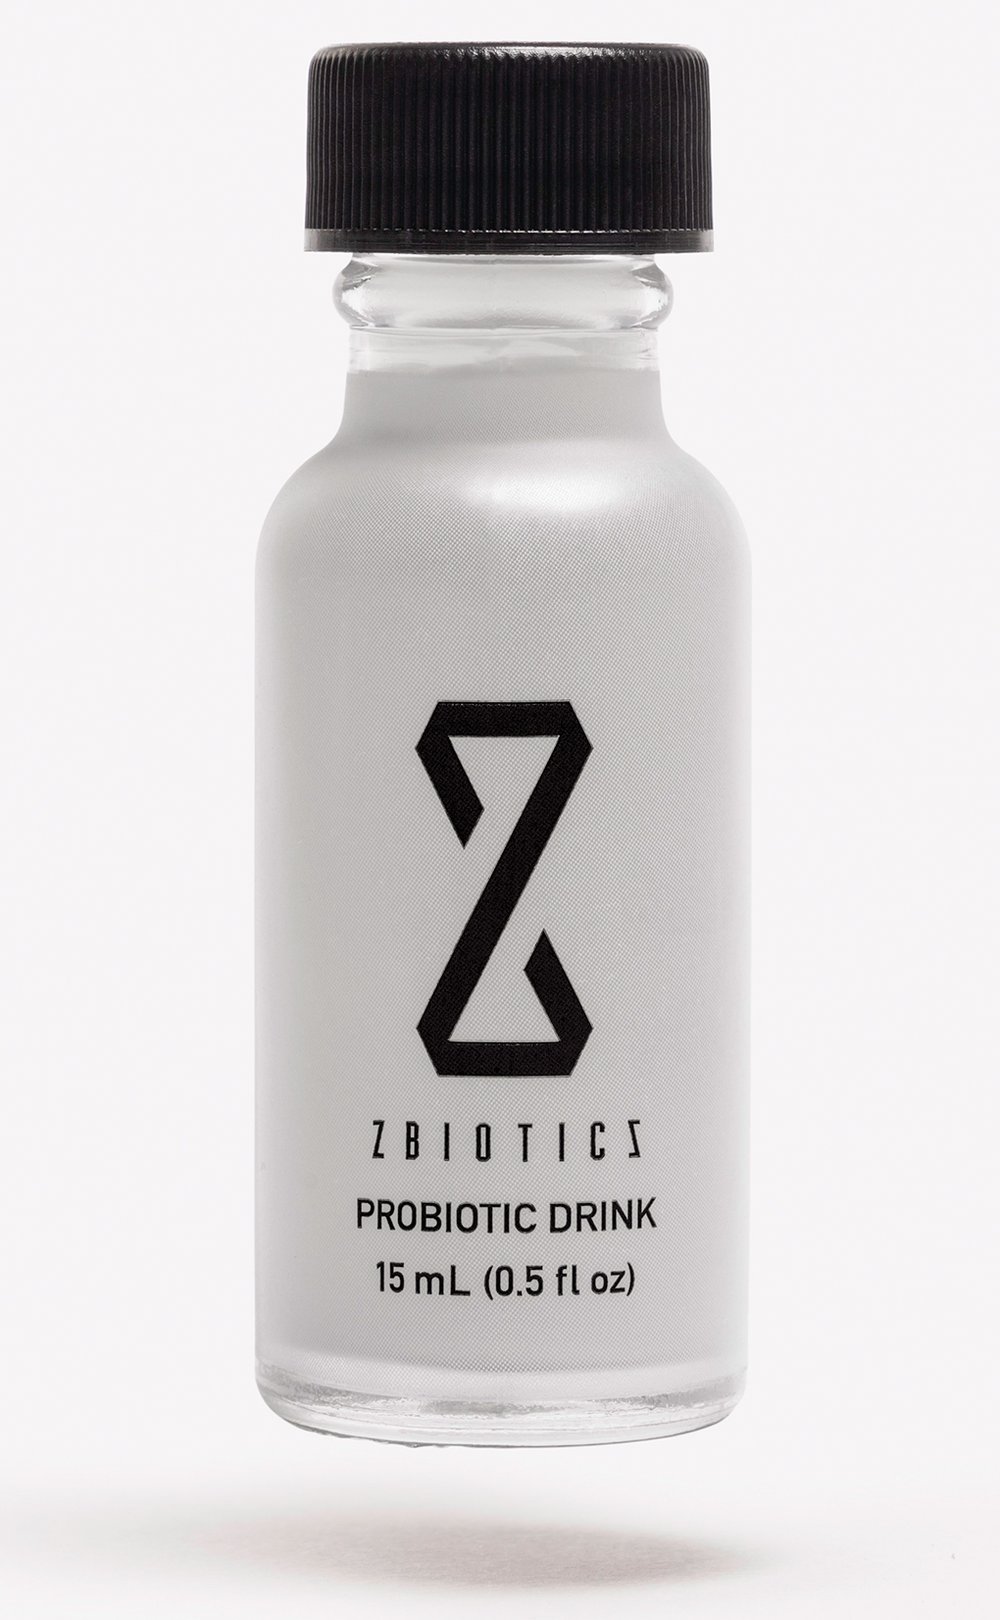 Zibiotics in a small glass bottle